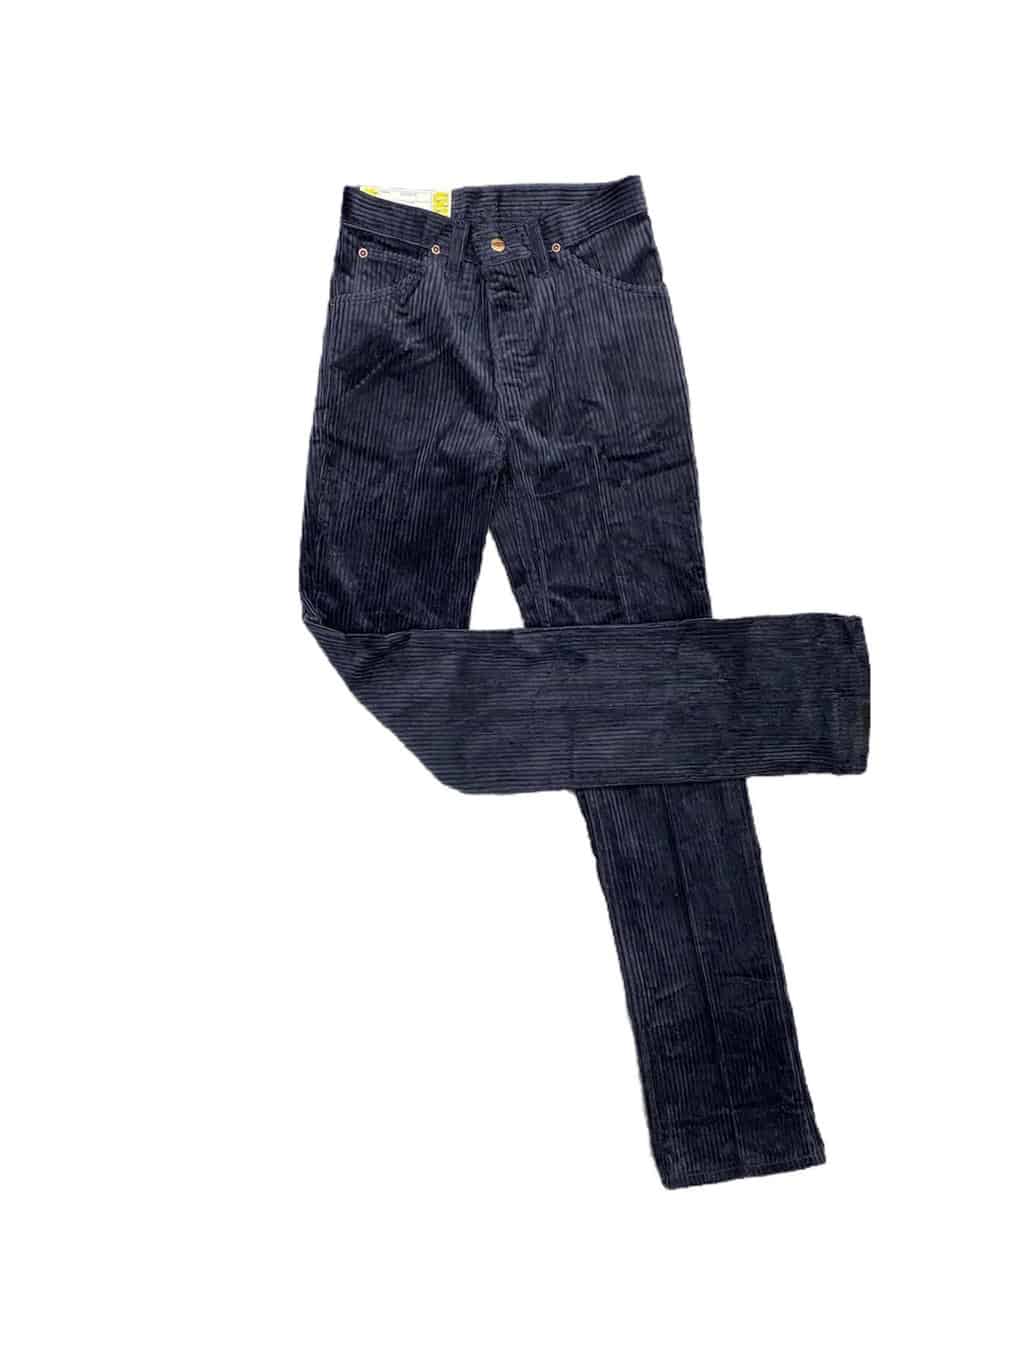 Vintage Wrangler navy blue corduroy high rise jeans circa 70s 80s,  deadstock W27 x L33.5 St Cyr Vintage